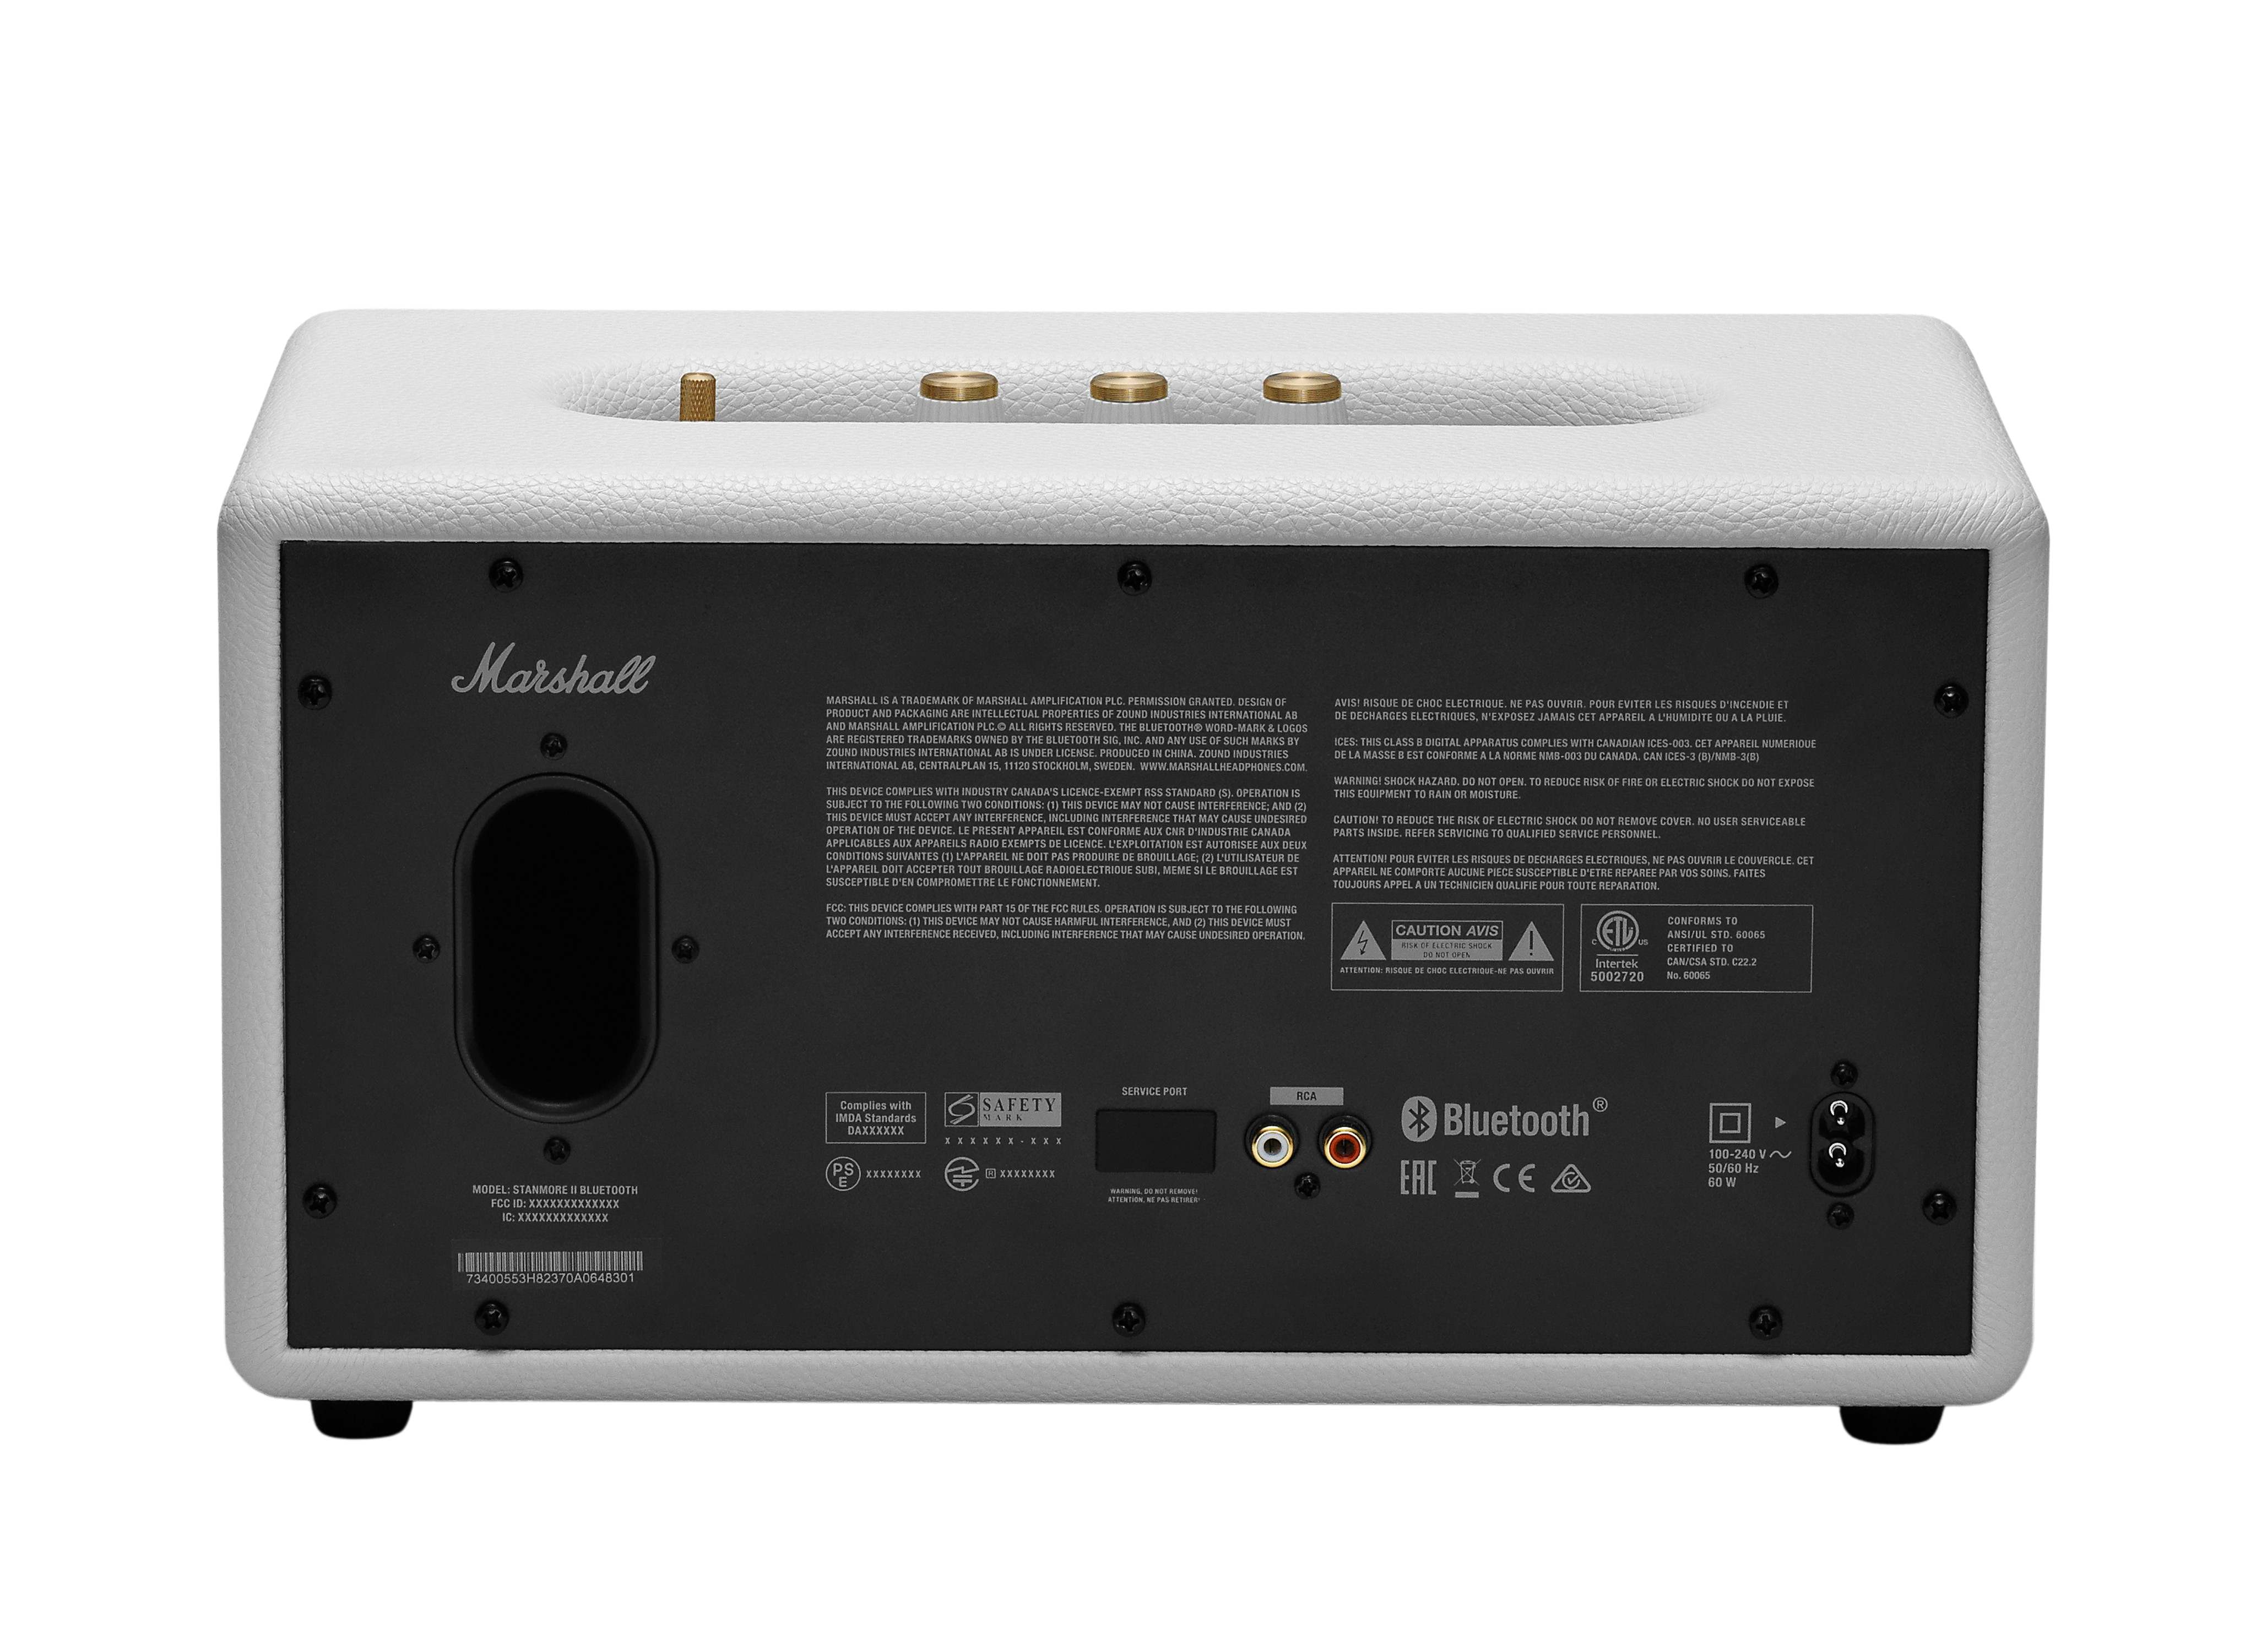 Rent Hi-Fi Audio Marshall Stanmore BT Speaker (US) $9.90 per month